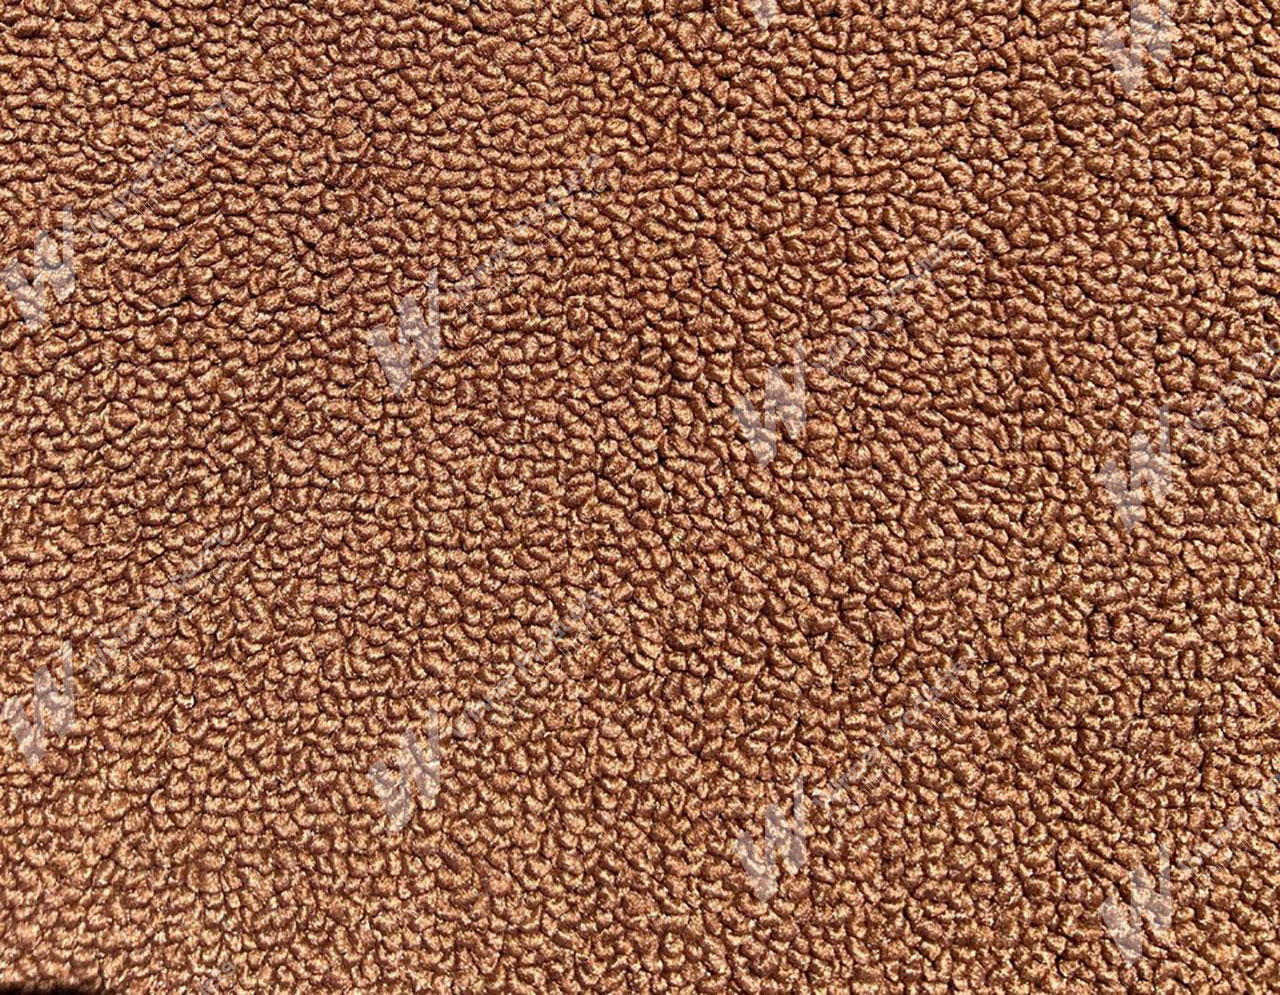 Ford Falcon 500 XA 500 Wagon P Parchment Carpet (Image 1 of 1)